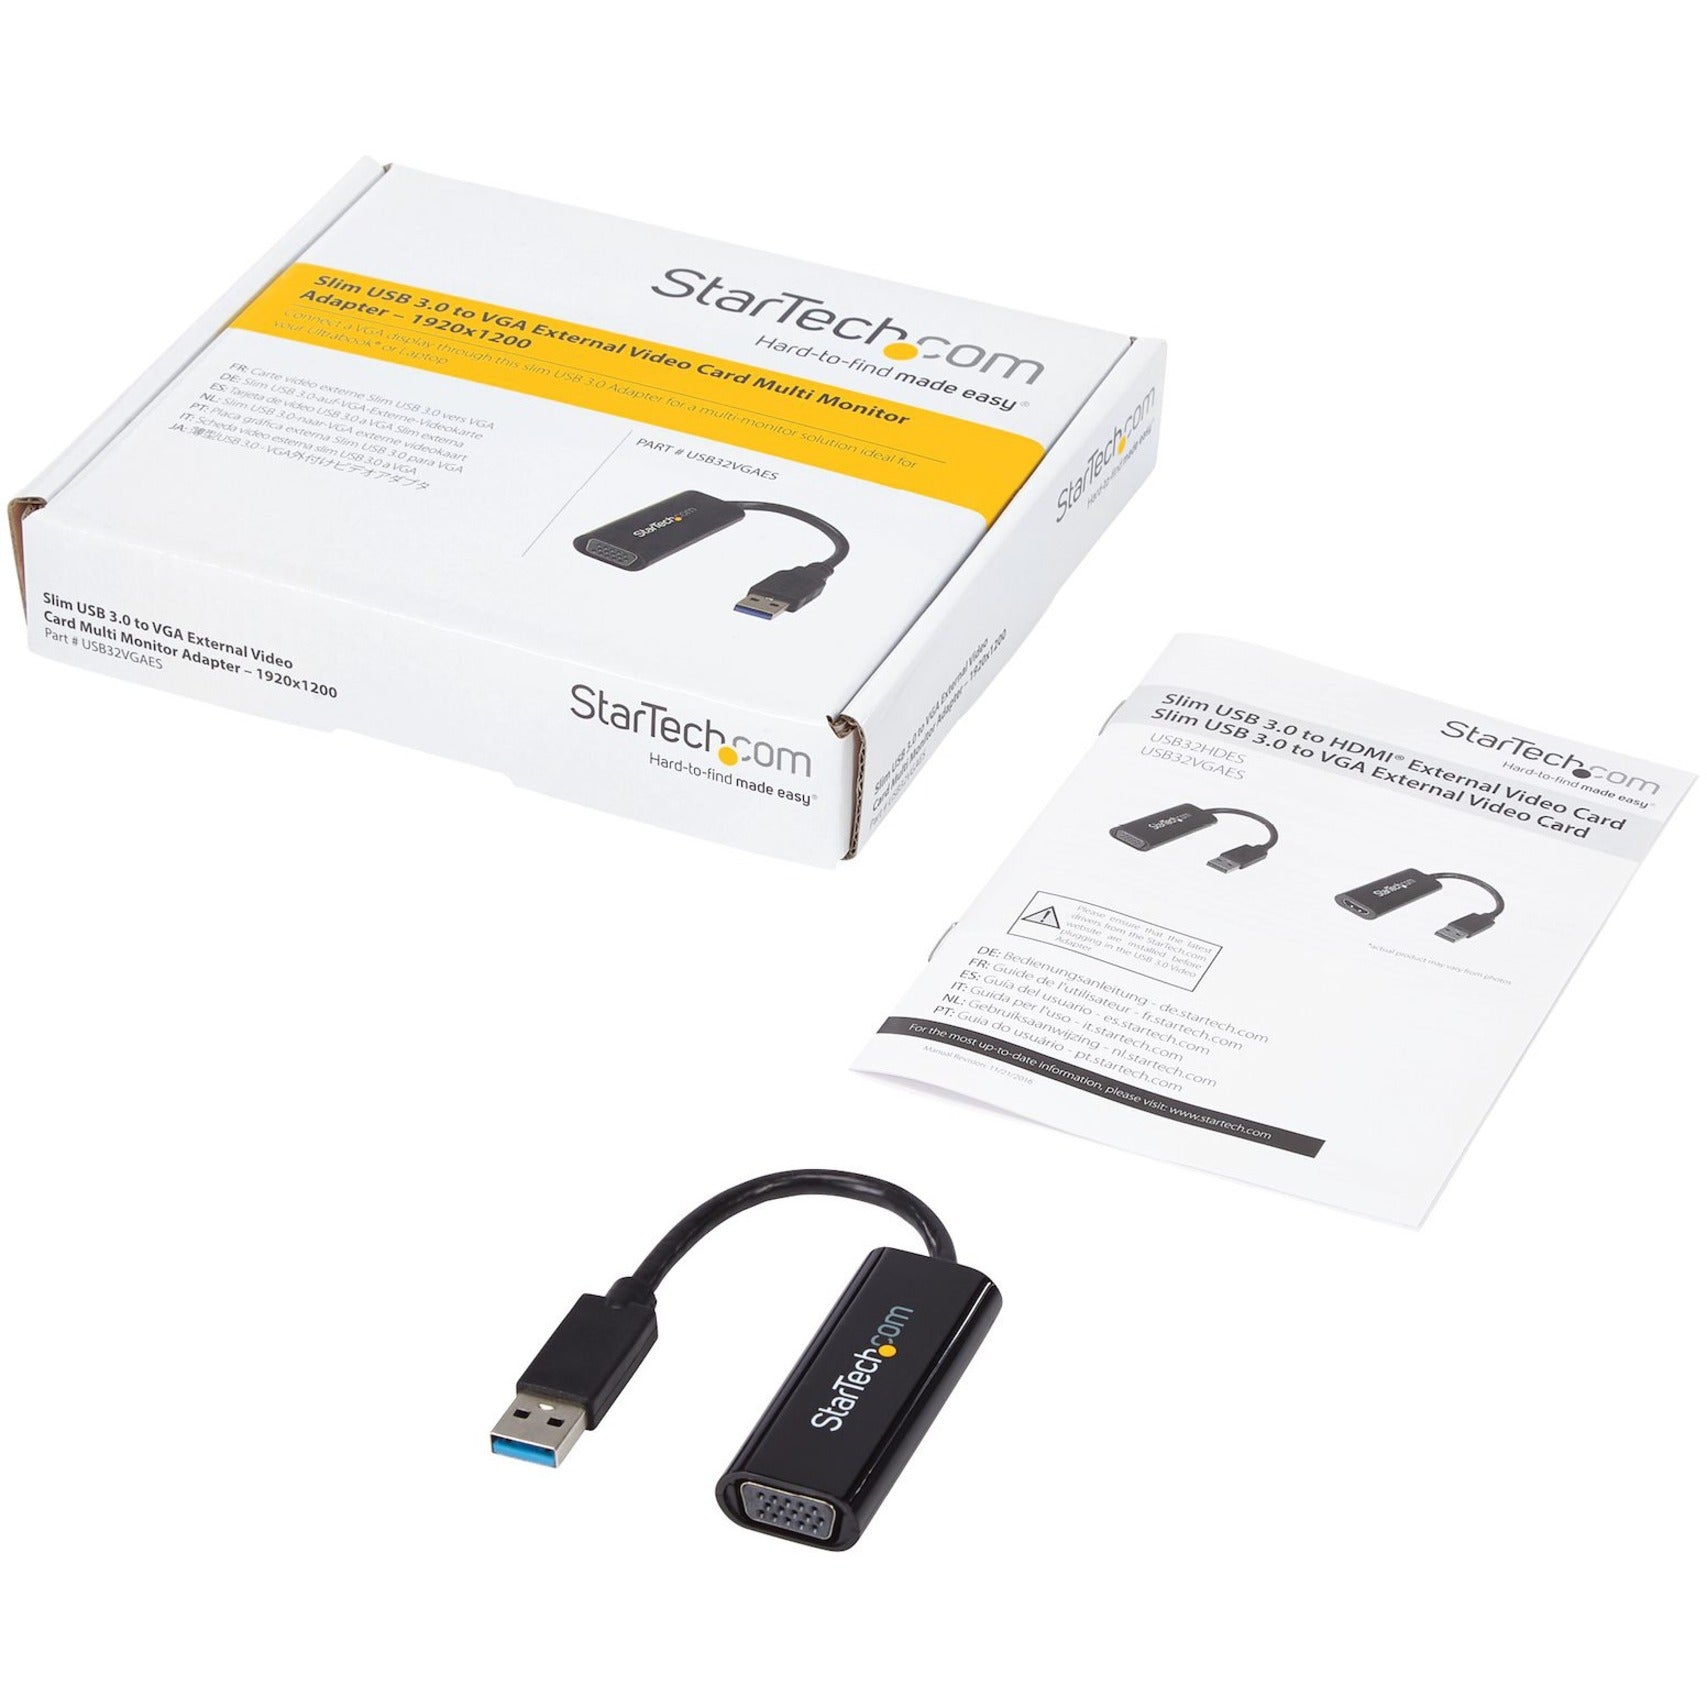 StarTech.com USB32VGAES Slim USB 3.0 Video Adapter, External Multi Monitor Adapter